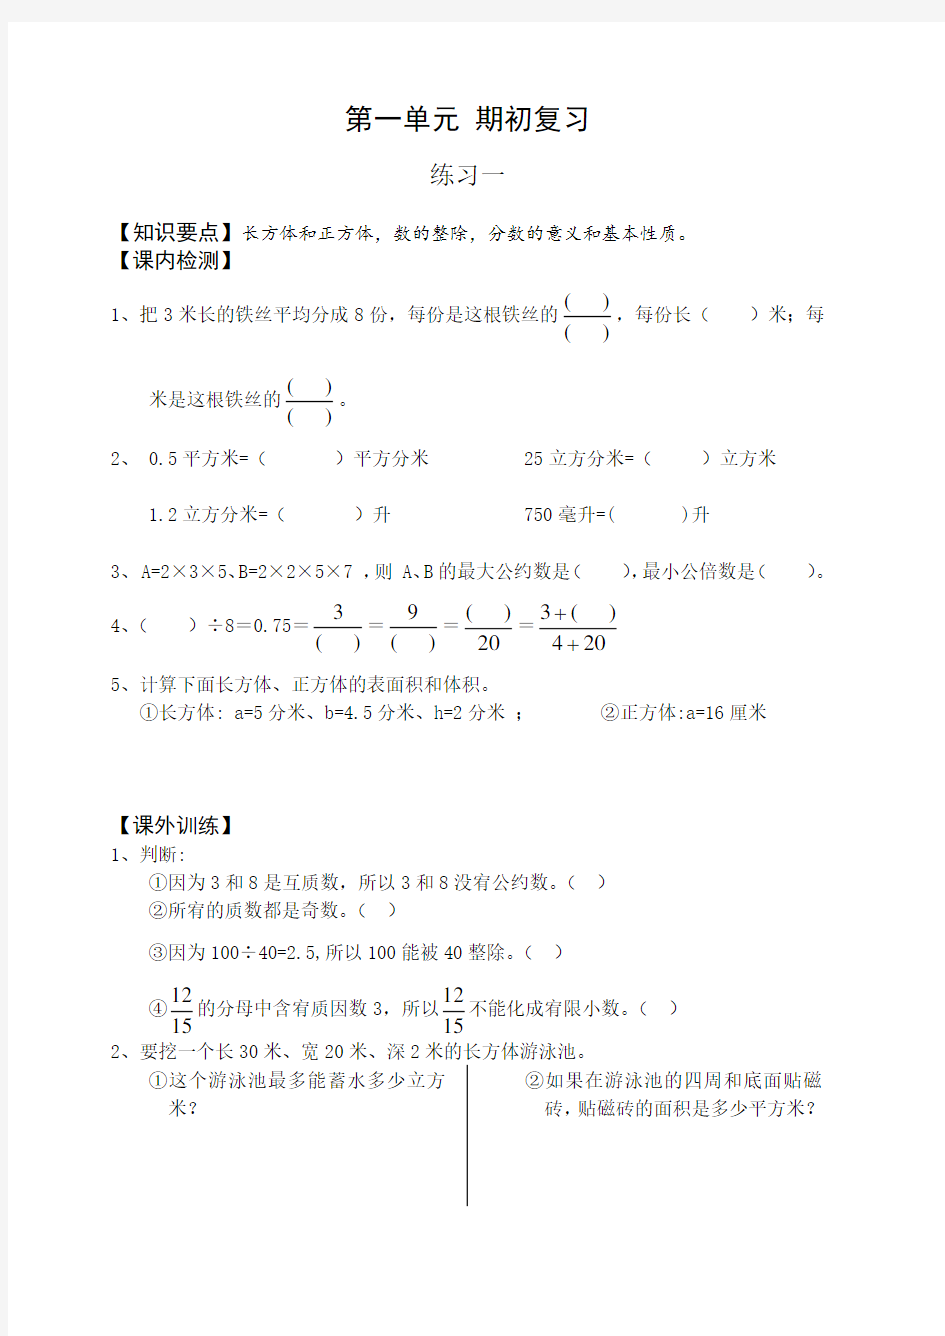 (vip专享)【沪教版】小学数学六年级上册练习题全集(Word版,含答案)